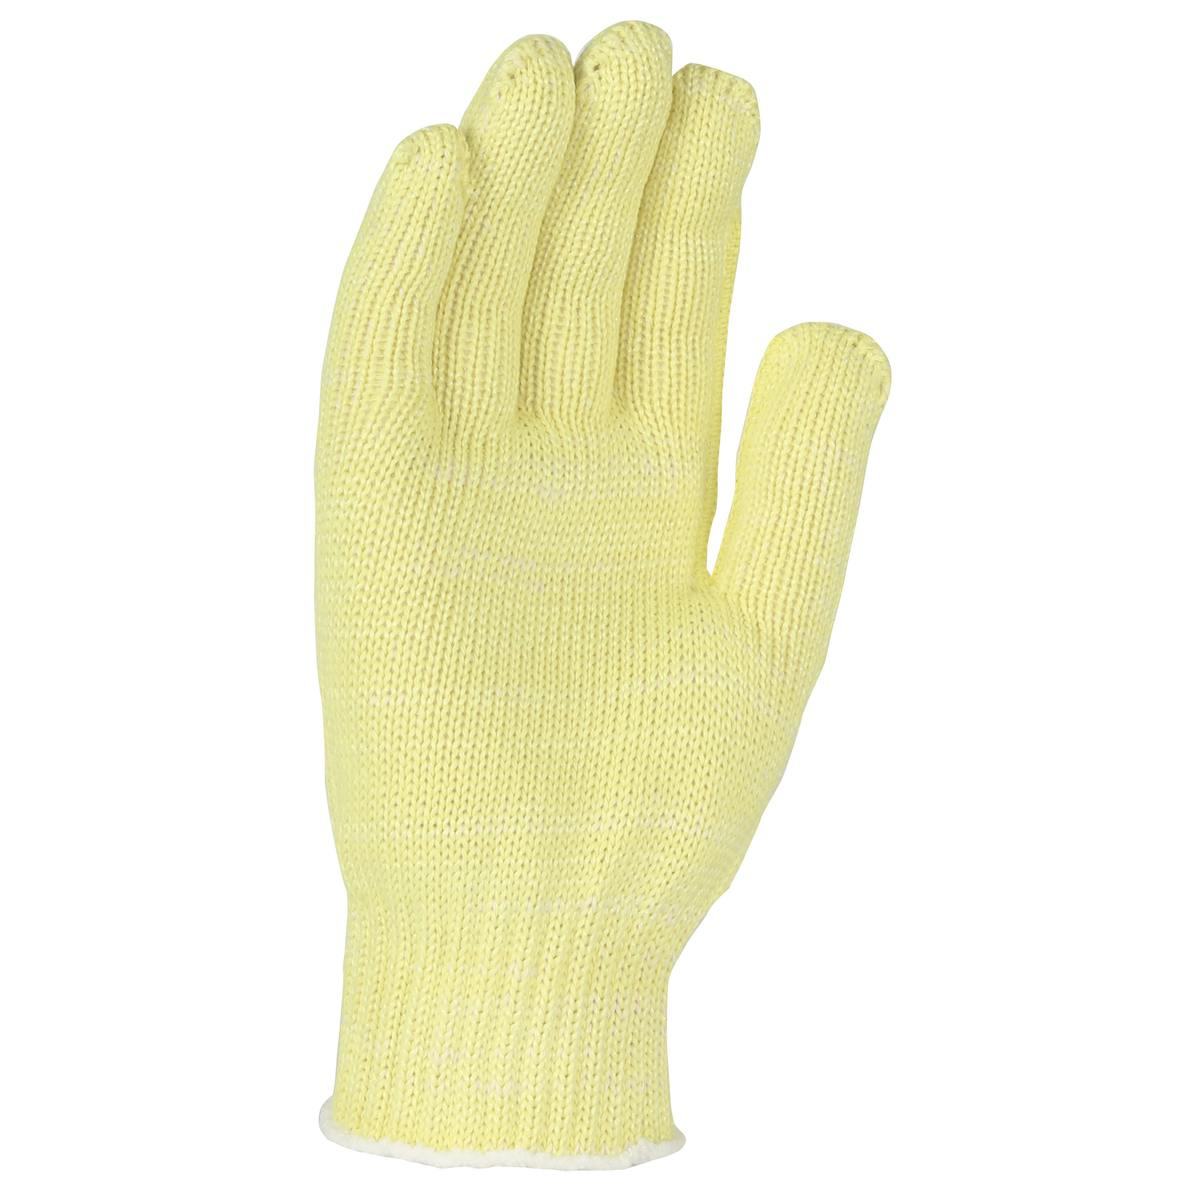 Kut Gard® Seamless Knit ATA® / Aramid Blended Glove - Heavy Weight (MATATW40PL-OERT)_0